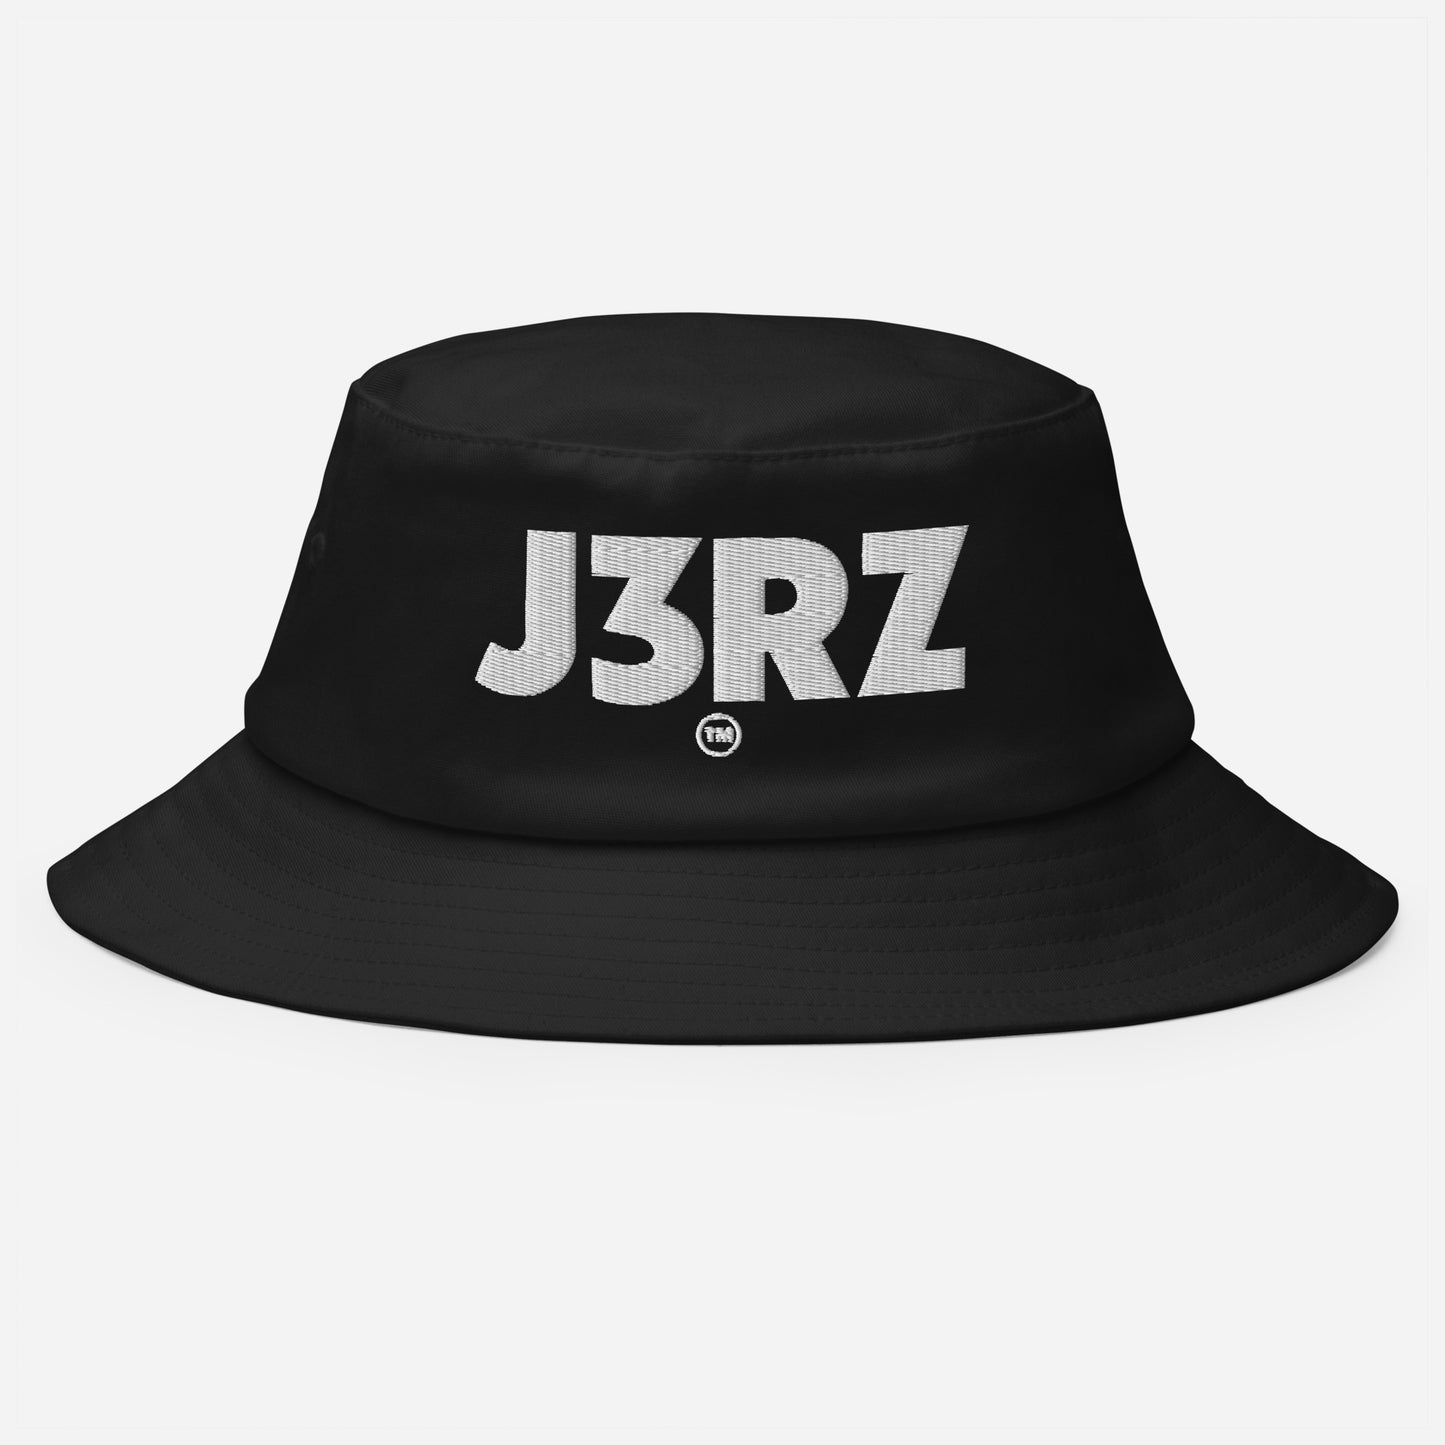 BigSmoke Soprano Clothing: J3RZ Bucket Hat